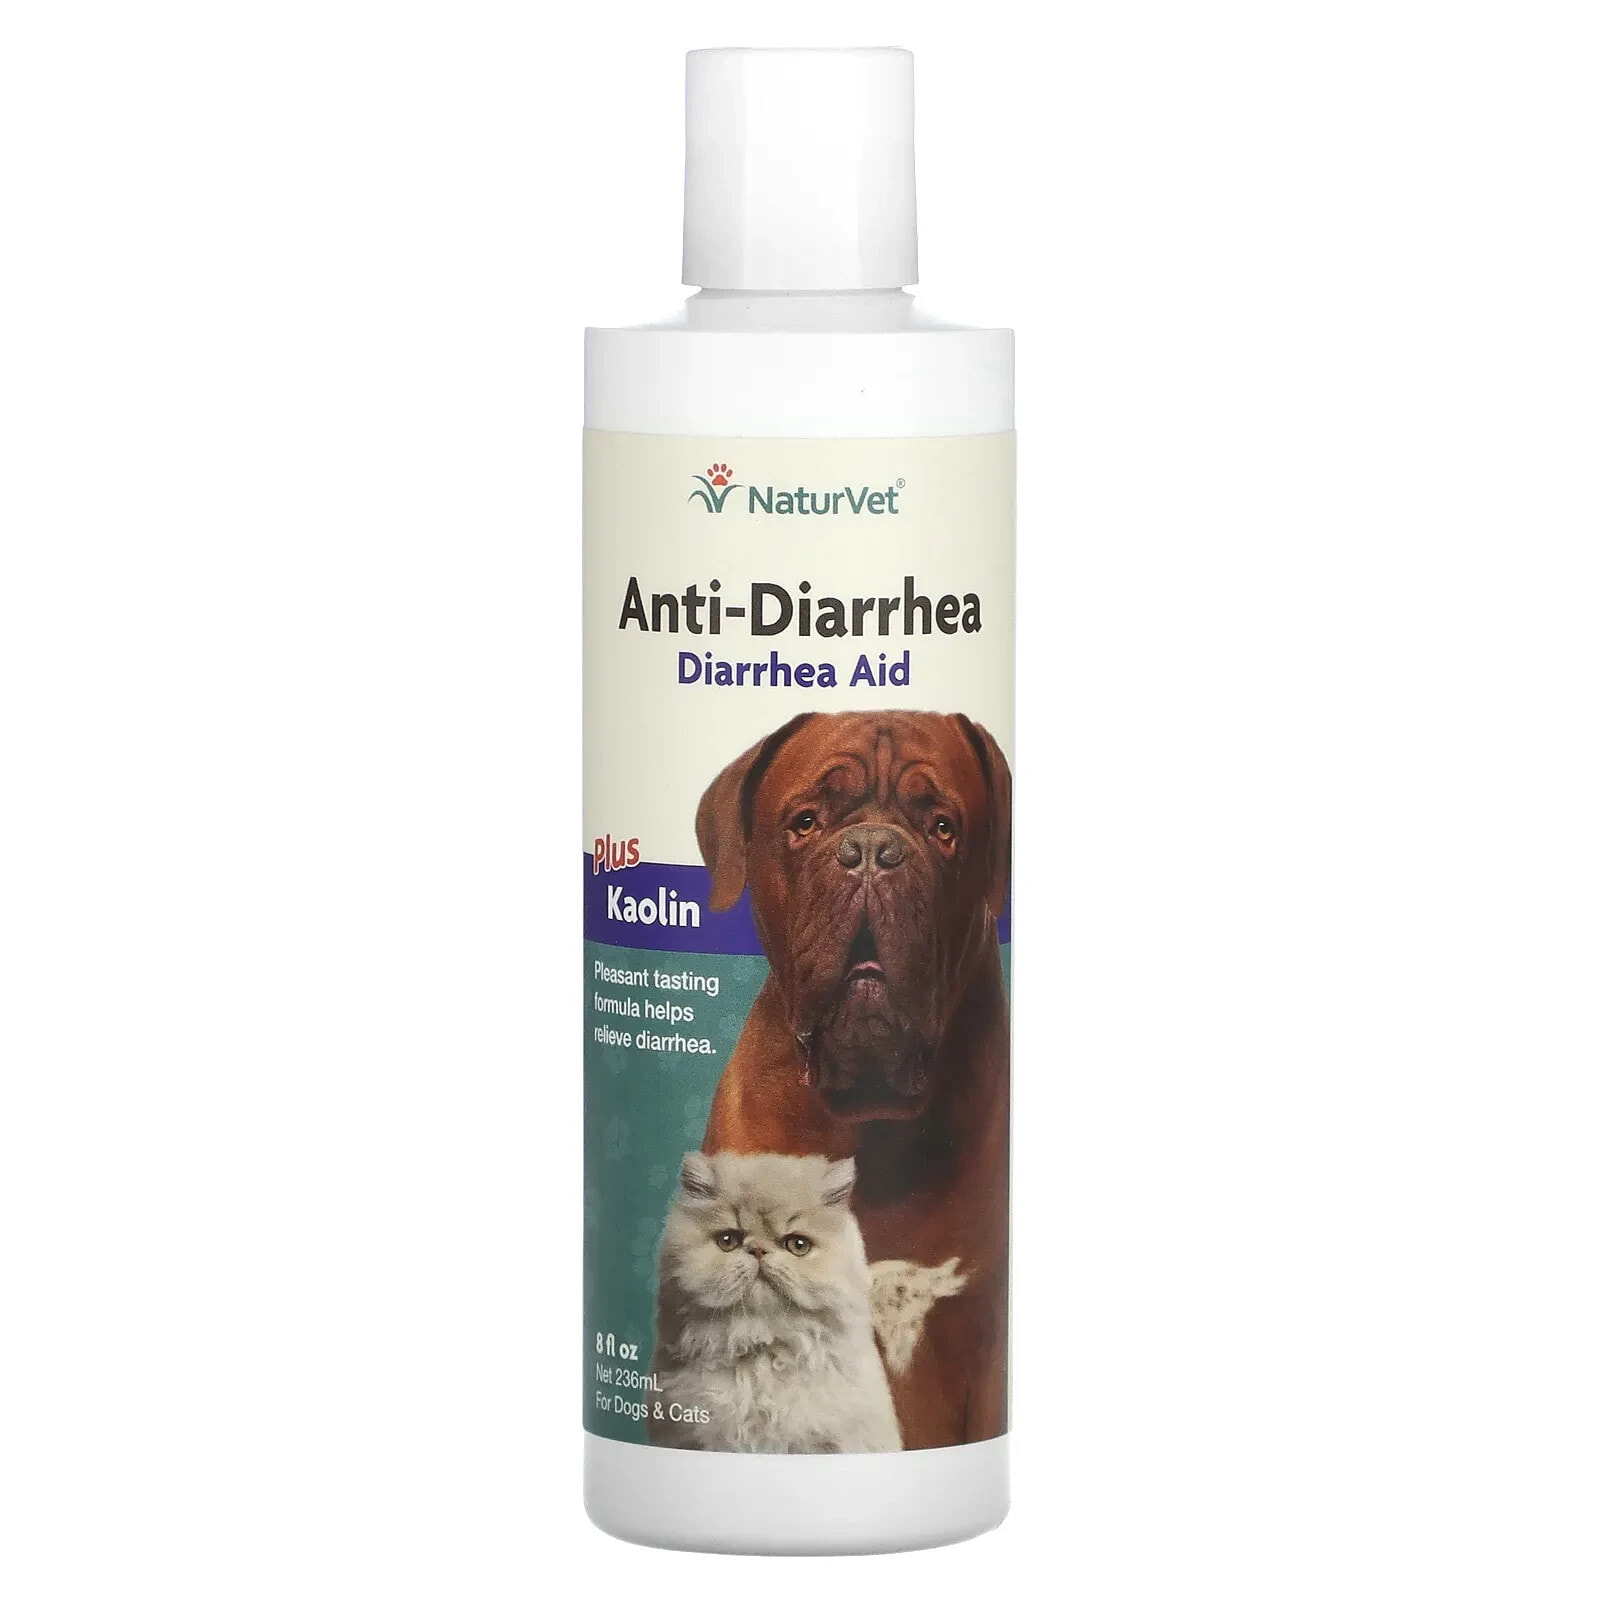 Anti-Diarrhea, Diarrhea Aid Plus Kaolin, For Dogs & Cats, 8 fl oz (236 ml)